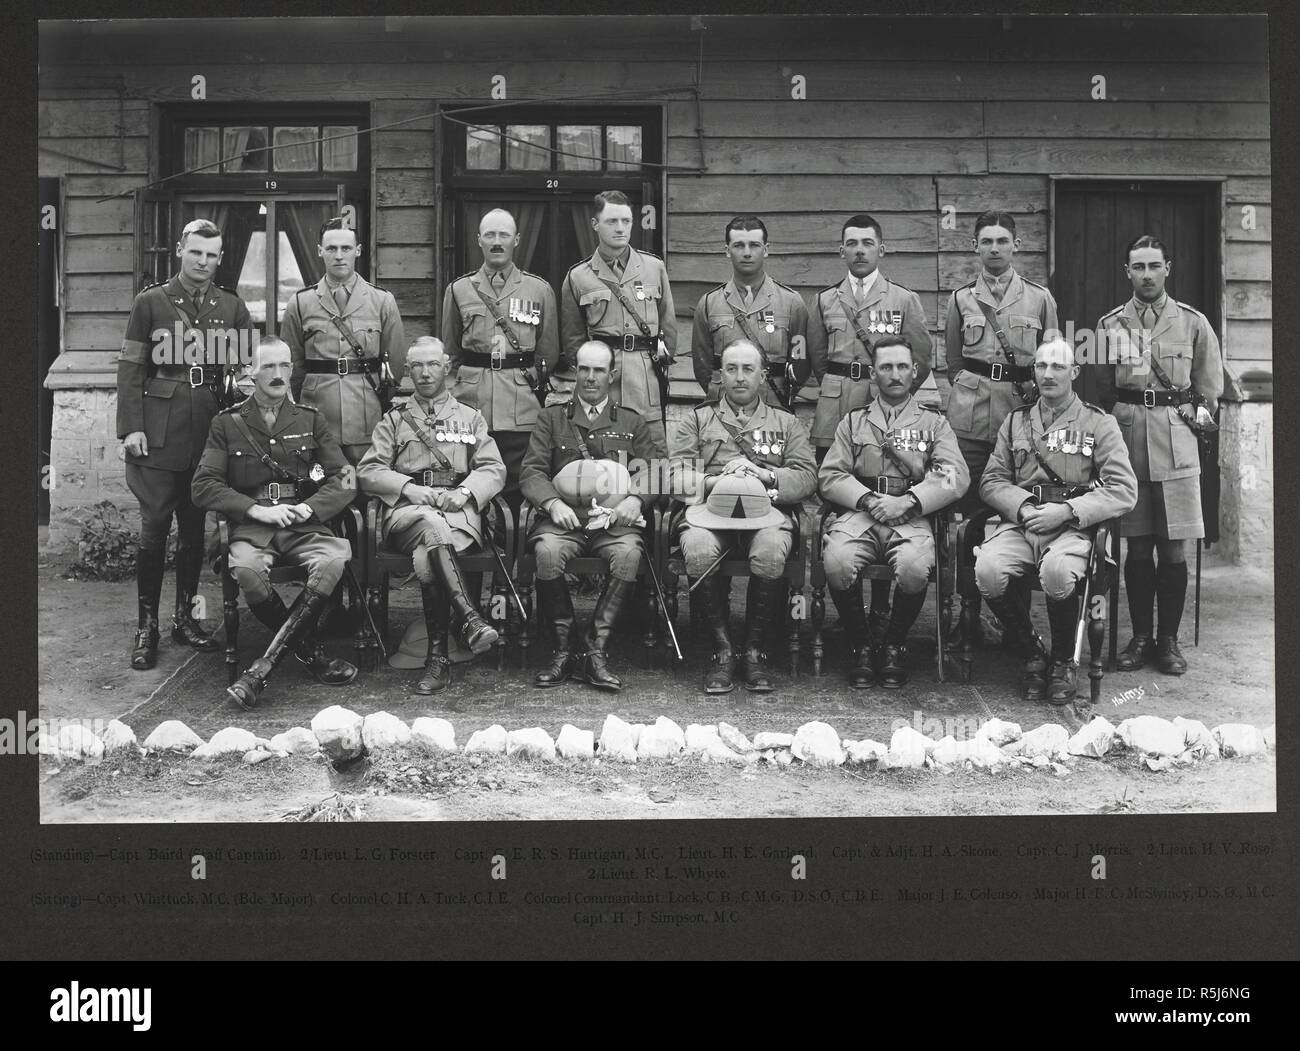 [Military group at Landi Khana.] 18 February 1926. Formally posed group portrait of British officers, taken after the unveiling of the Gurkha Centenary Bell. The sitters are identified as follows (Standing): Capt. Baird (Staff Captain); 2/Lieut L.G. Forster; Capt. G.E.R.S. Hartigan M.C.; Lieut. H.E. Garland; Capt. & Adjt. H.O. Skone; Capt. C.J. Morris; 2/Lieut H.V. Rose; 2/Lieut. R.L. Whyte. (Seated): Capt. Whittuck M.C. (Bde. Major); Colonel C.H.A. Tuck C.I.E.; Colonel Commandant Lock [sic for Loch] C.B., C.M.G., D.S.O., C.B.E.; Major J.E. Colenso; Major H.F.C. McSwiney D.S.O., M.C.; Capt. H. Stock Photo